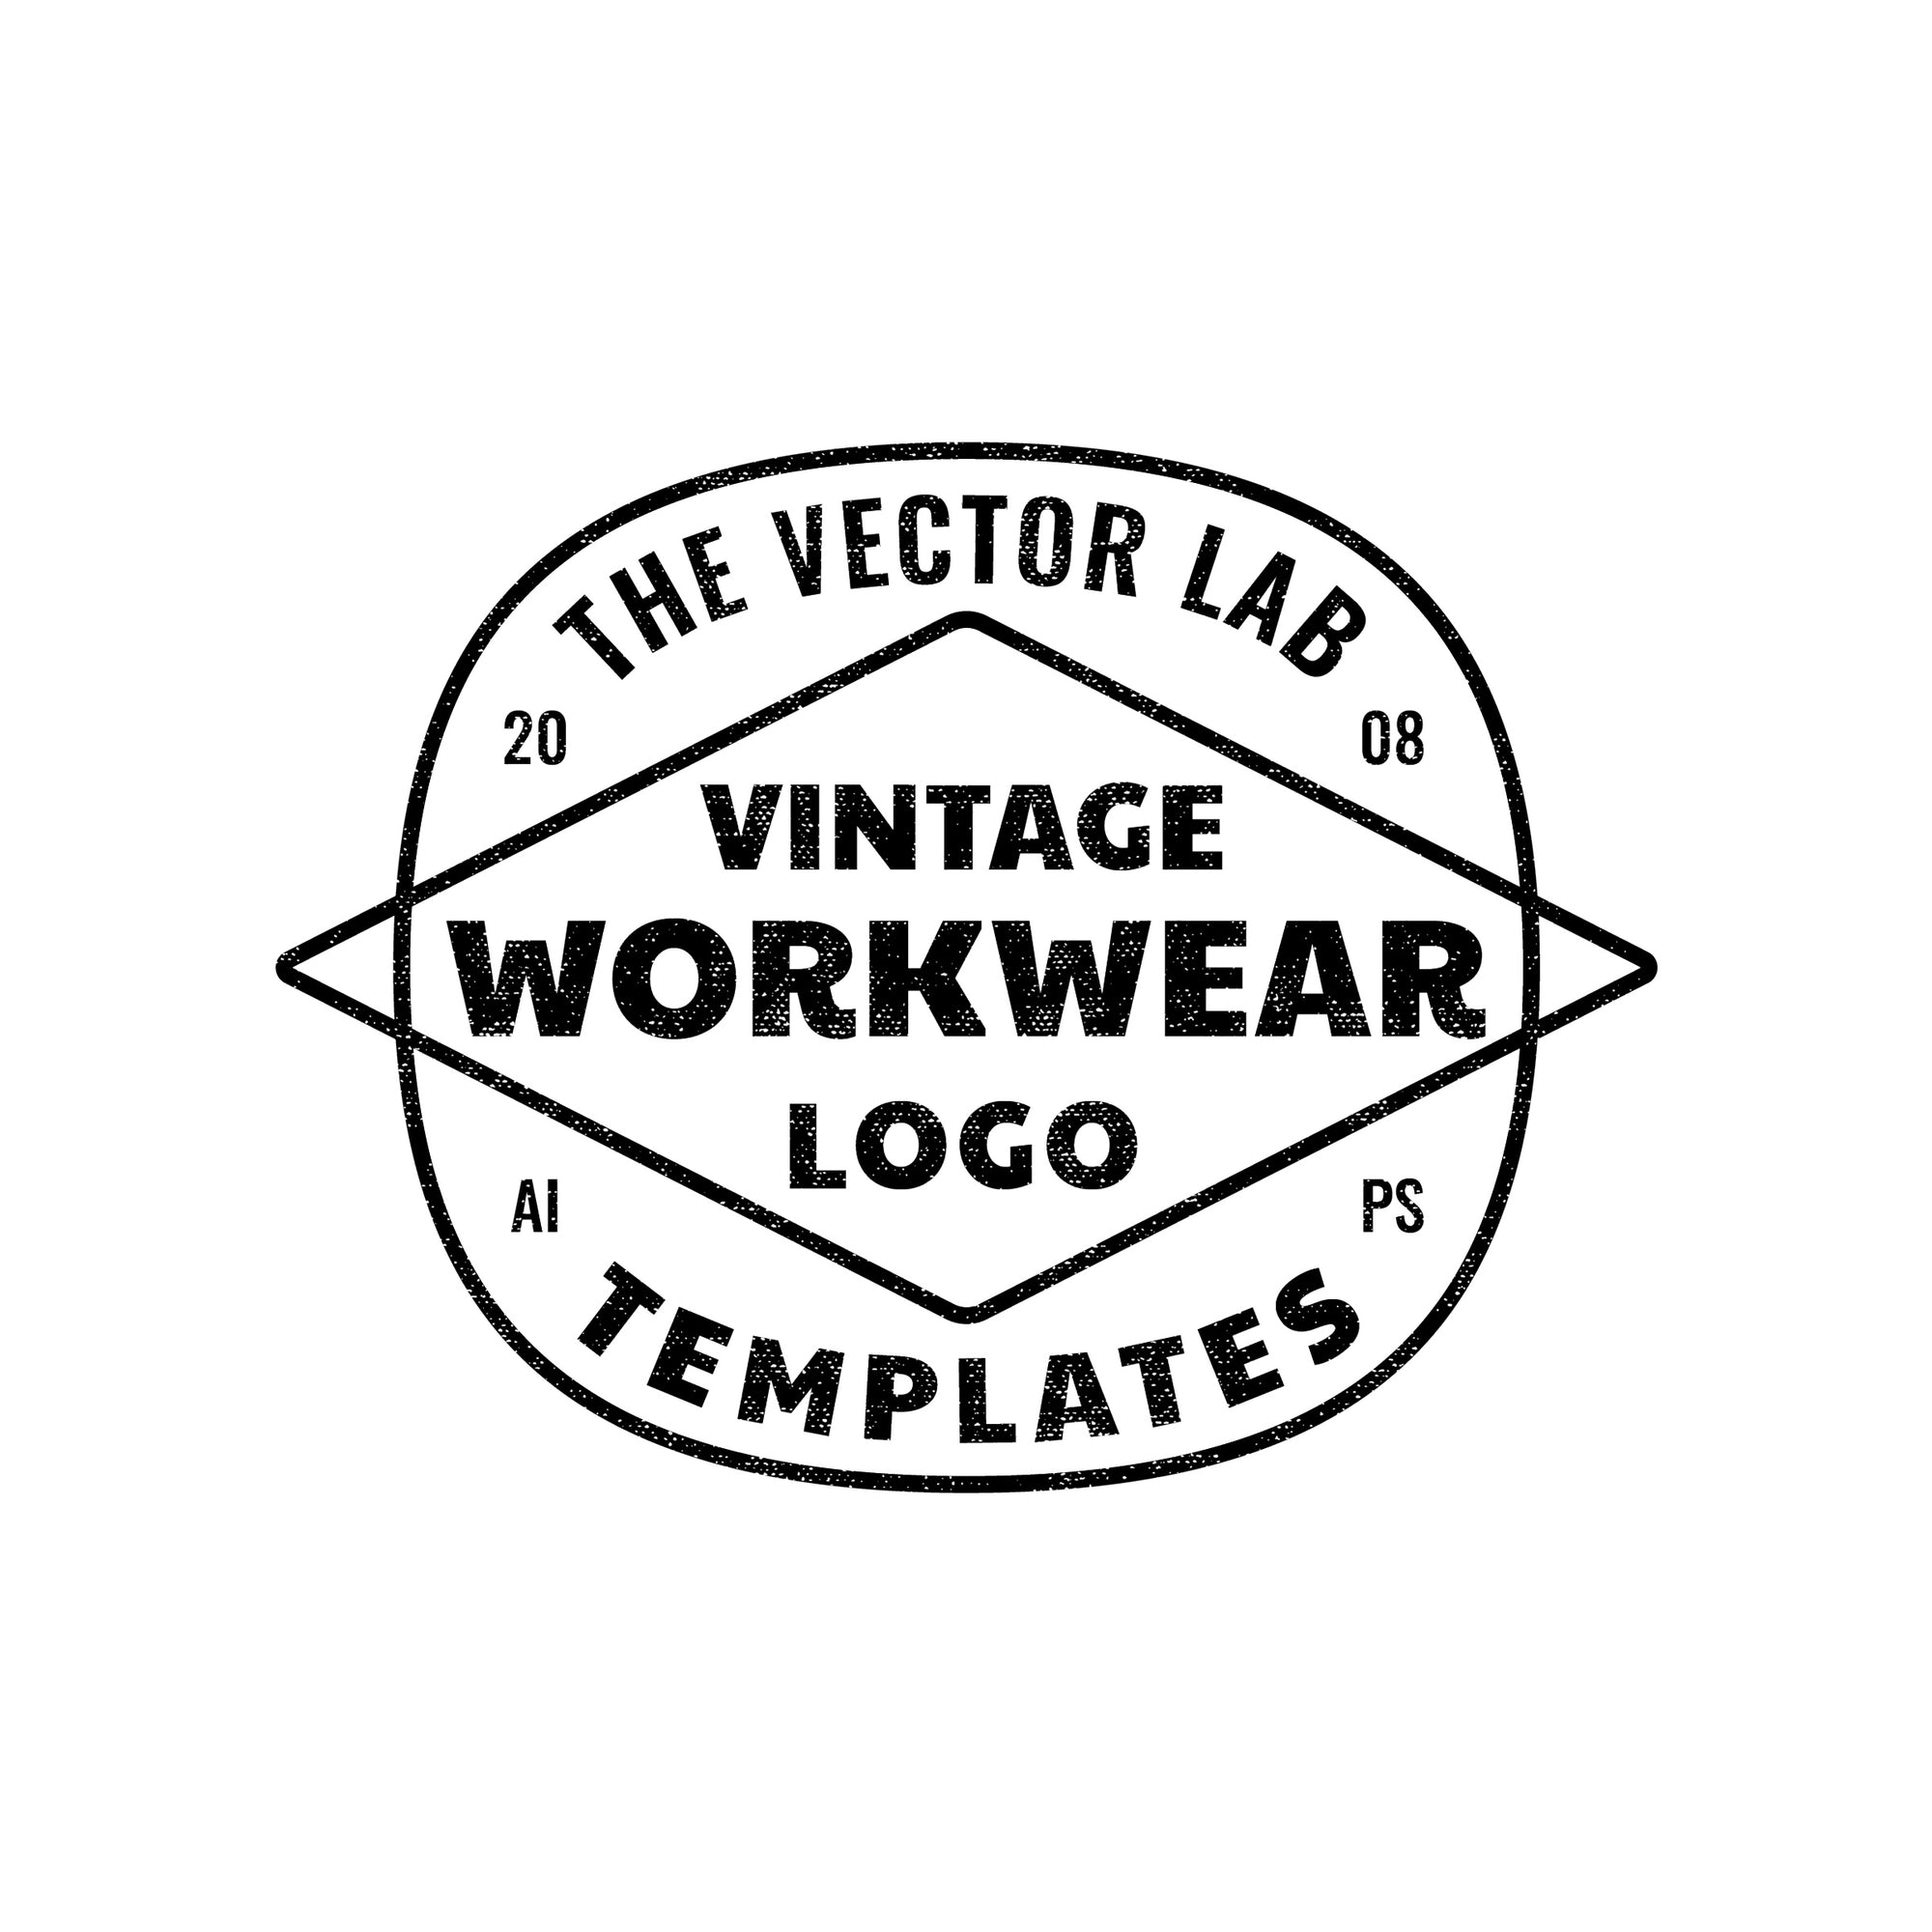 Vintage Workwear Logo Templates for Photoshop and Illustrator